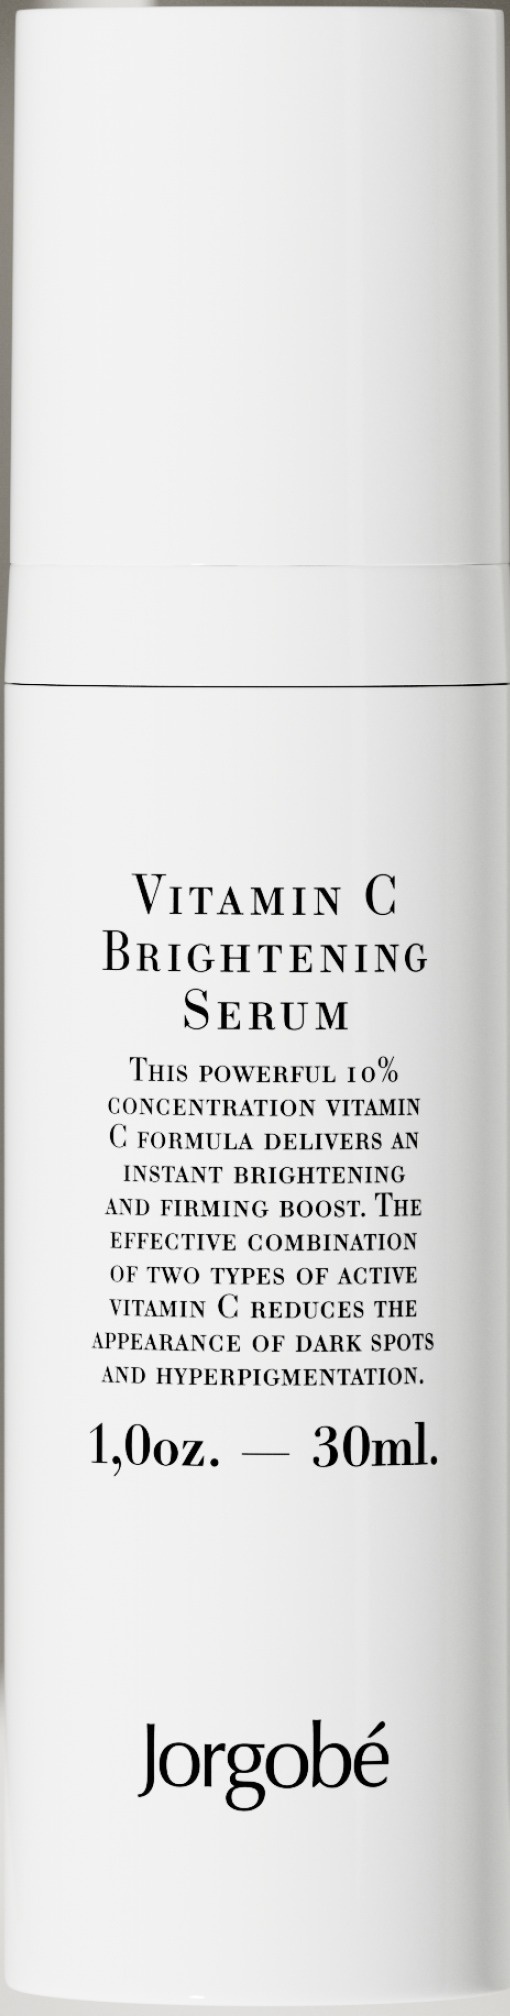 JorgObé 10% Vitamin C Brightening Serum